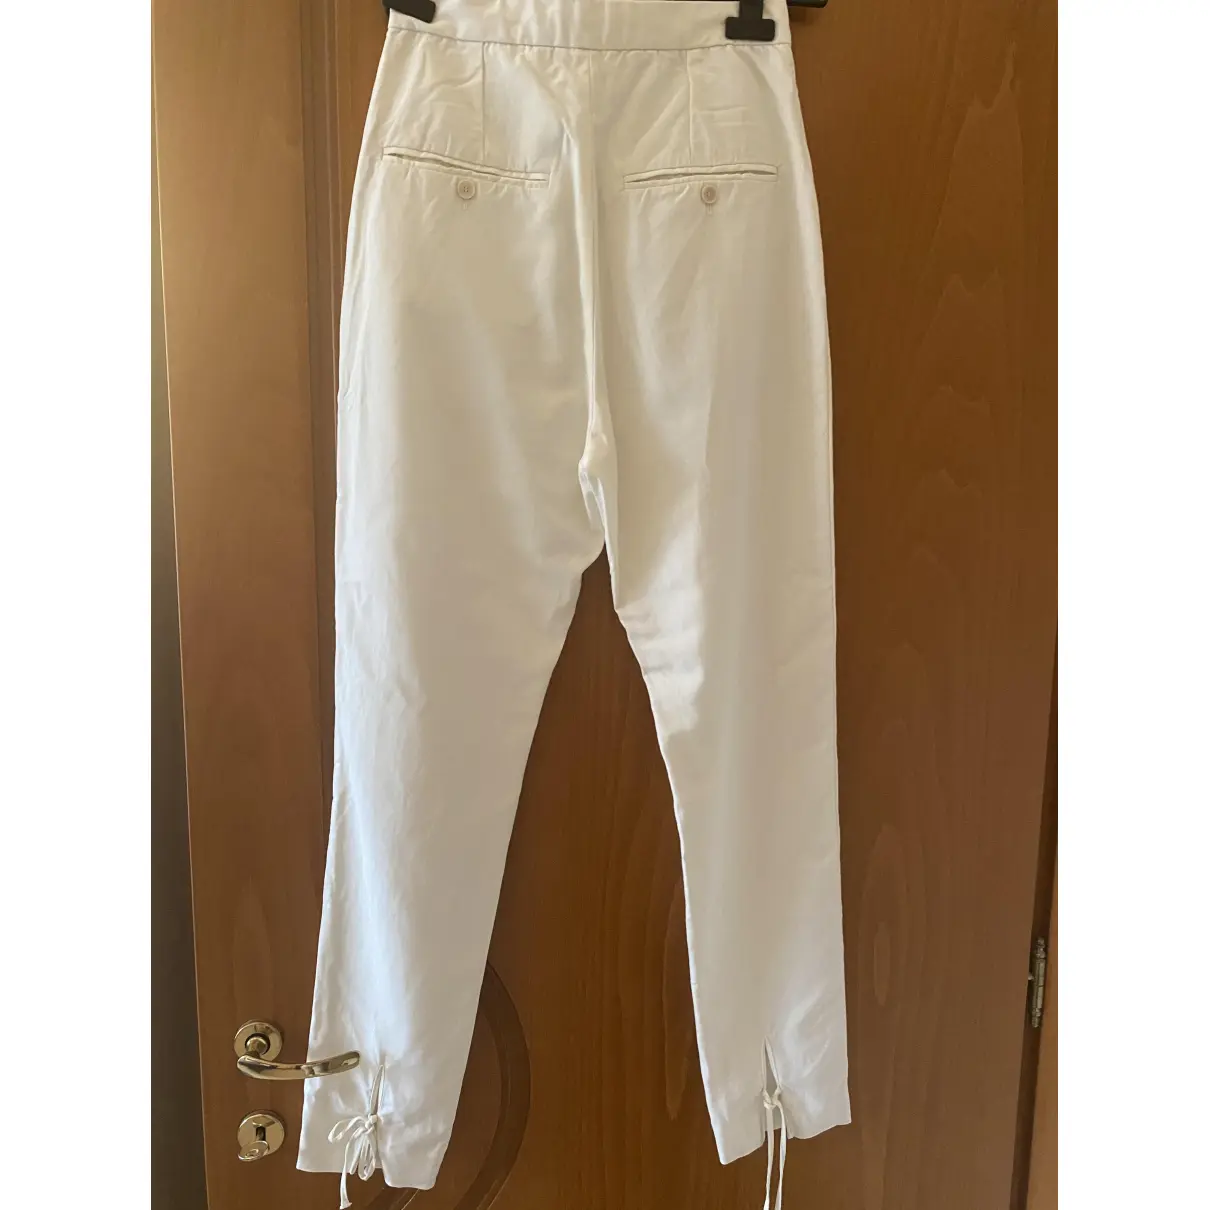 Buy Isabel Marant Silk trousers online